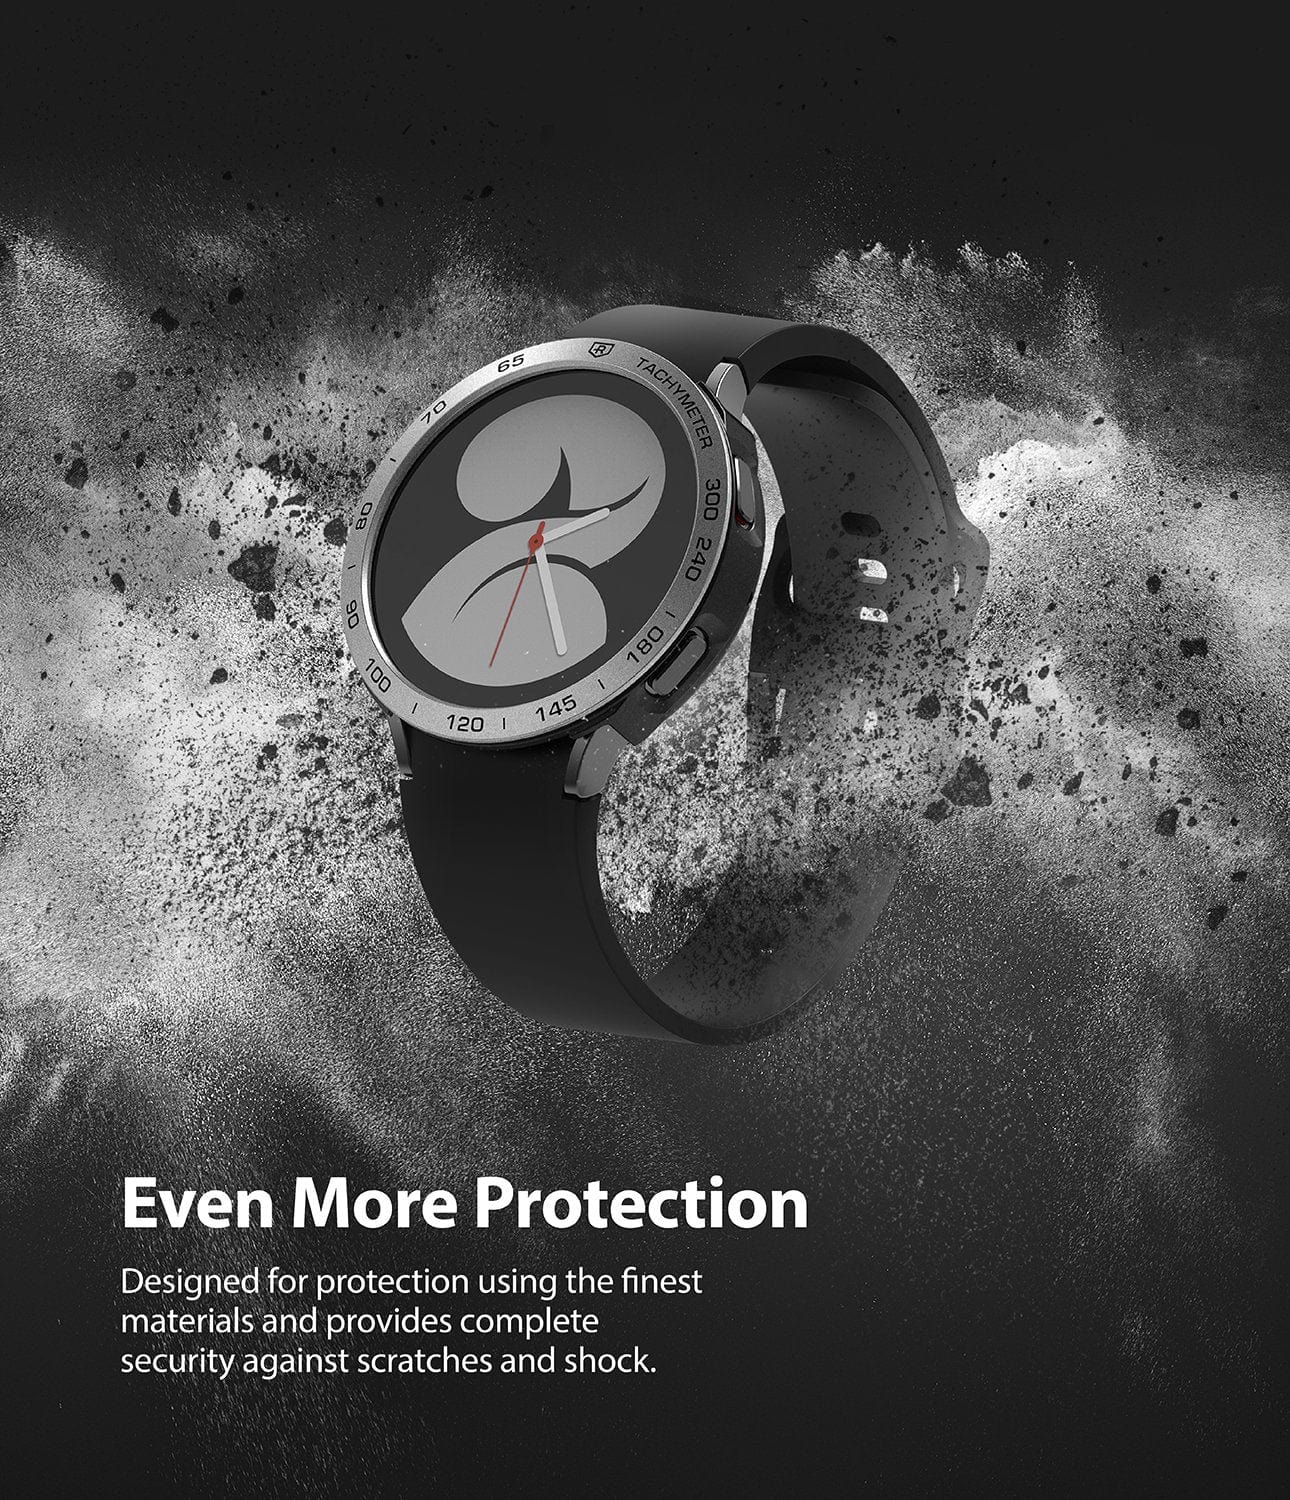 Galaxy Watch 4 40mm Air Sports Black + Silver Bezel Styling By Ringke